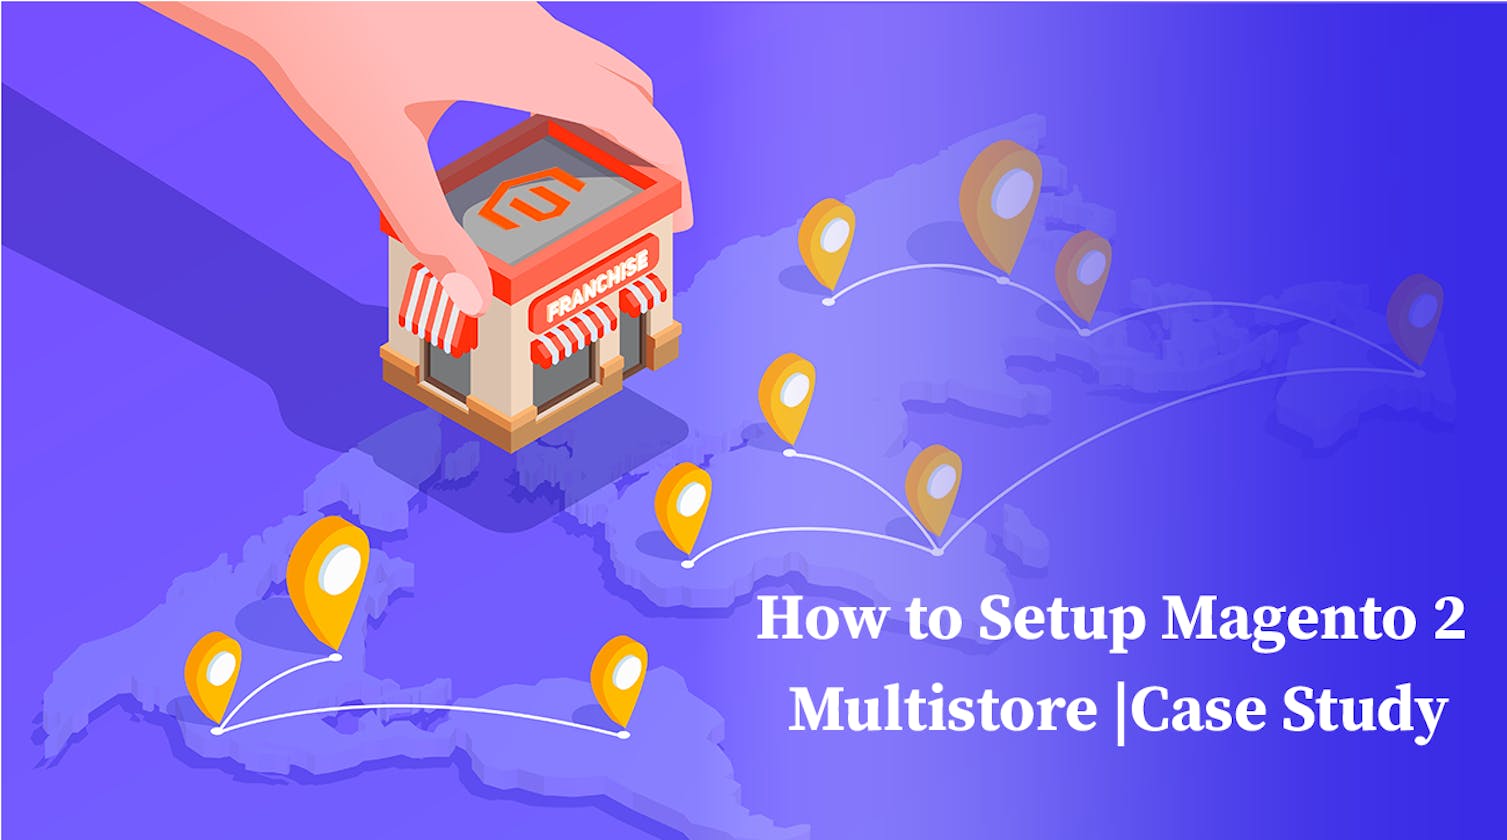 How to Setup Magento 2 Multistore |Case Study